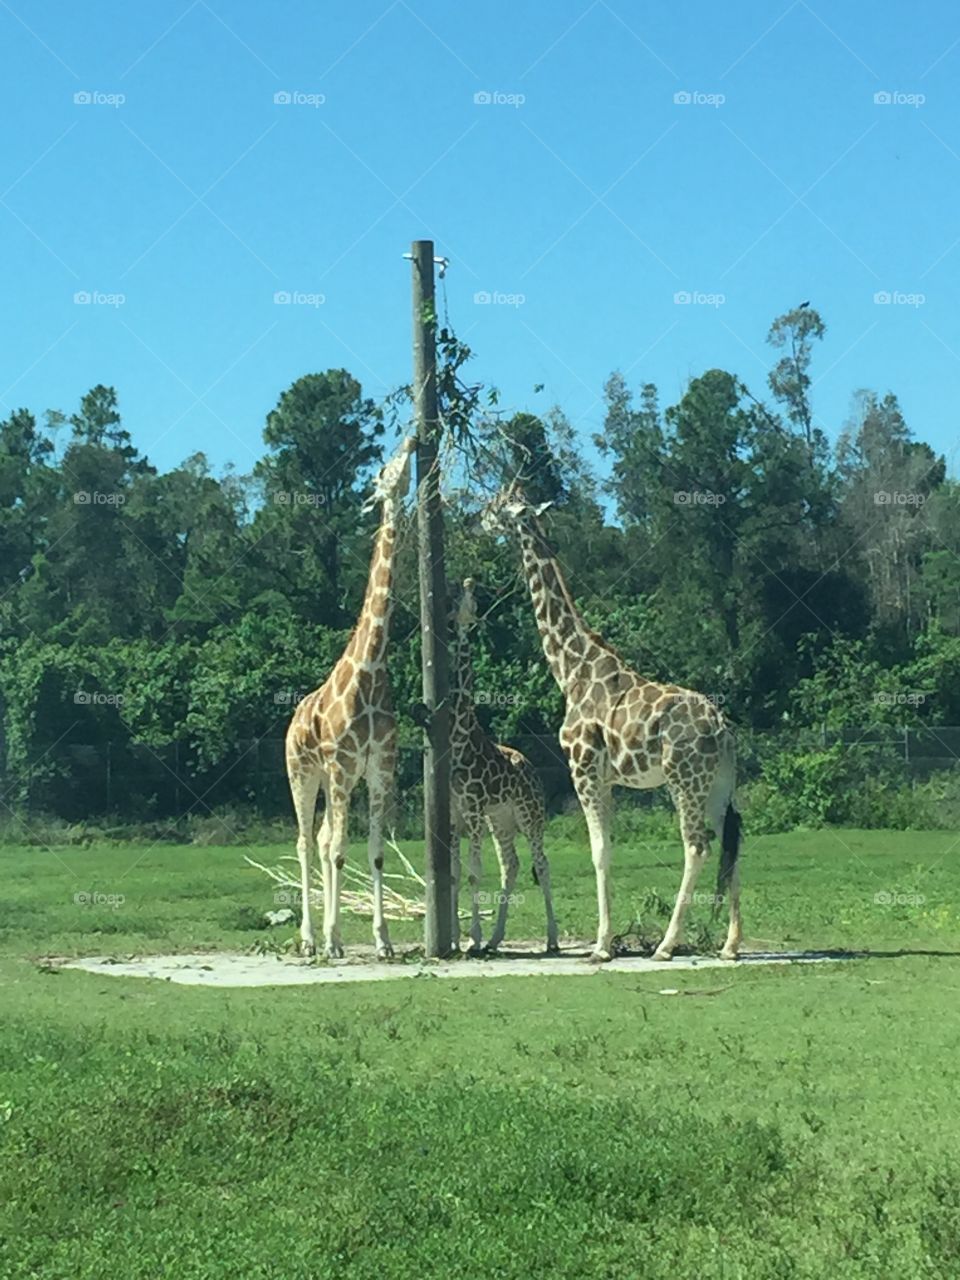 Three giraffes reaching up high to get food